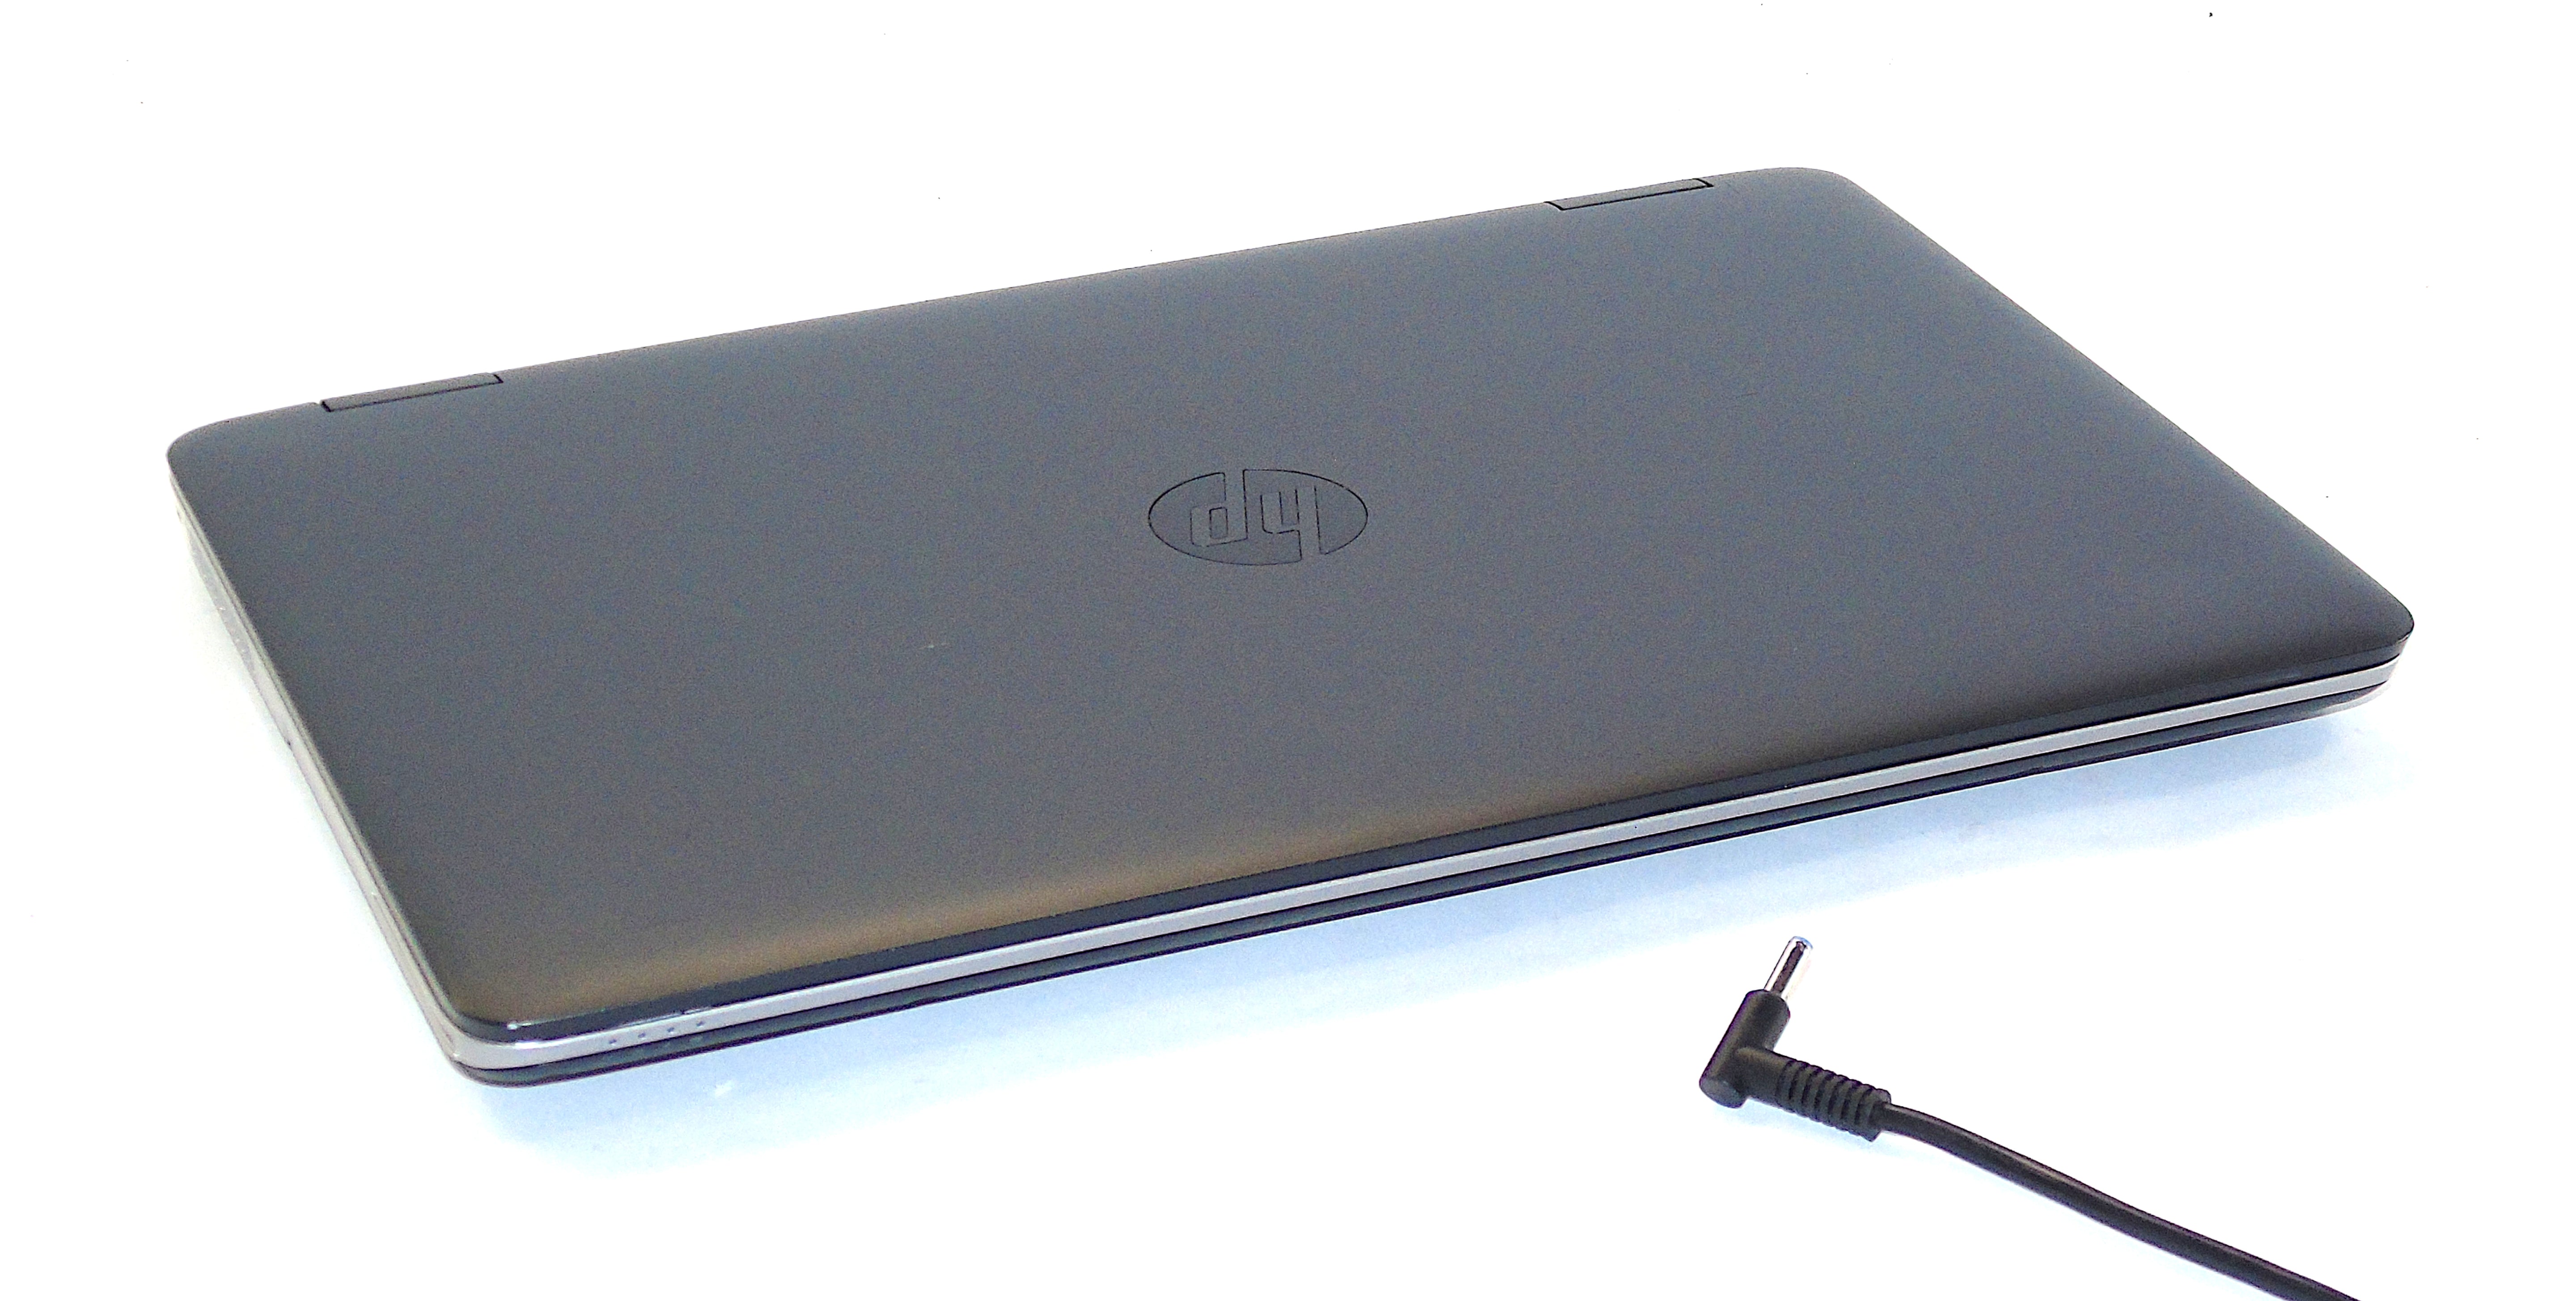 HP ProBook 650 G2 Laptop, 15.5" Core i5 6th Gen, 8GB RAM, 256GB SSD